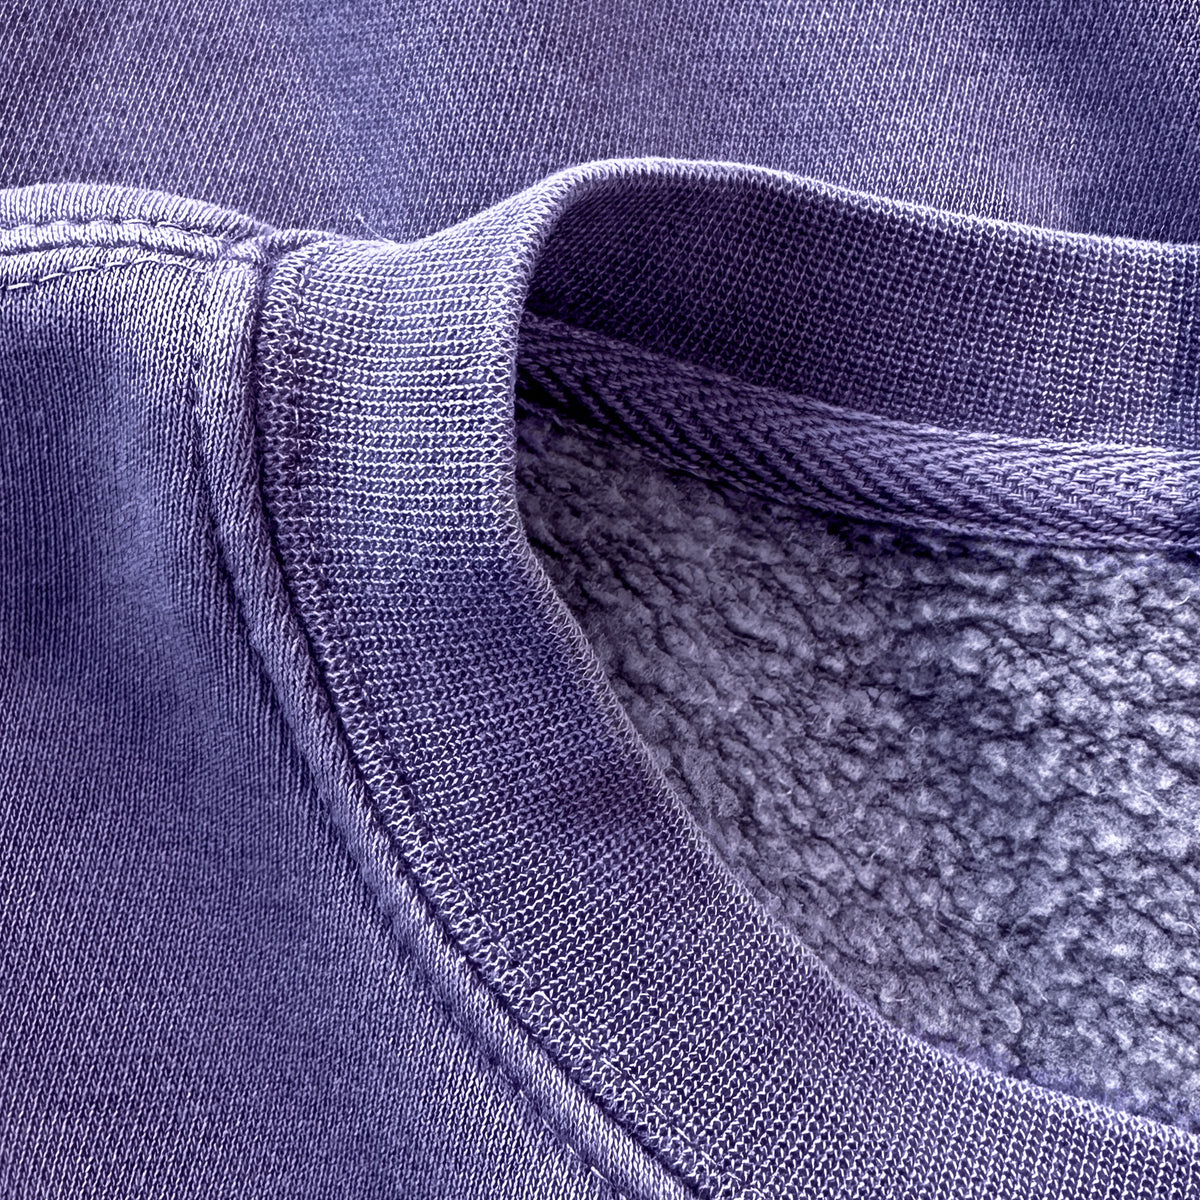 Worry Less — Garden More - Unisex Pigment Dyed Crew Sweatshirt